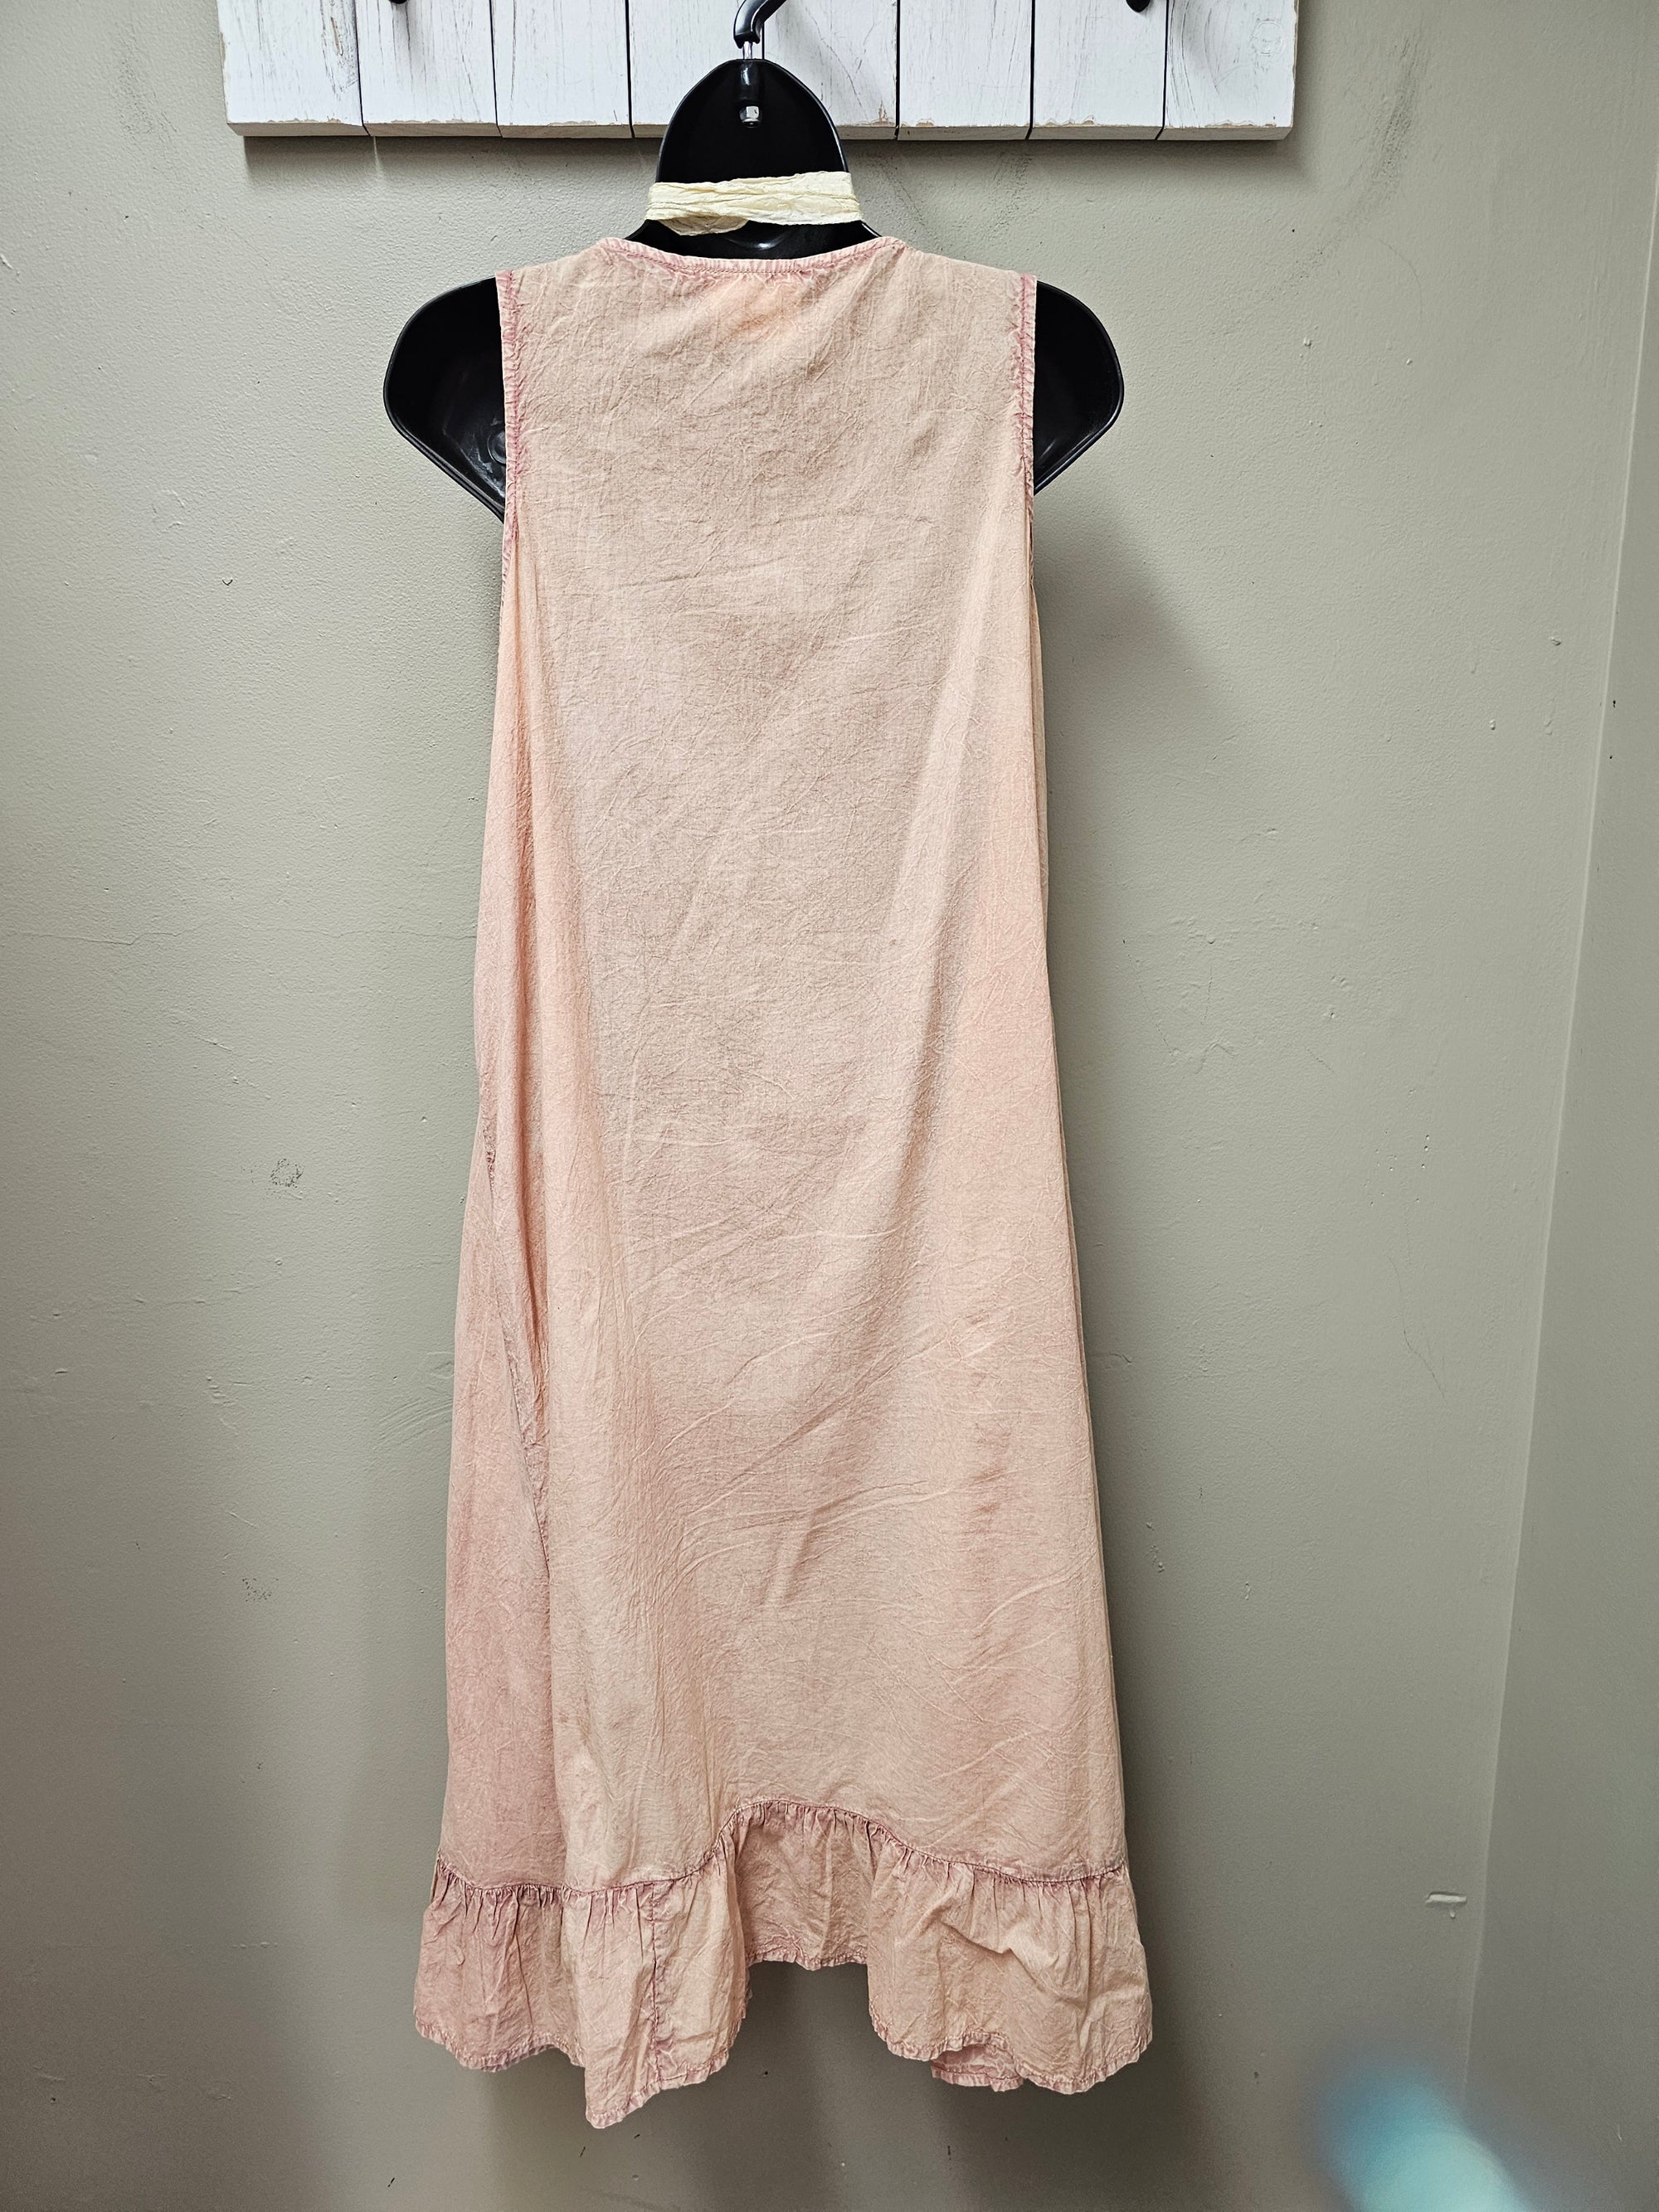 Romantic Front Ruffled Pink Dress